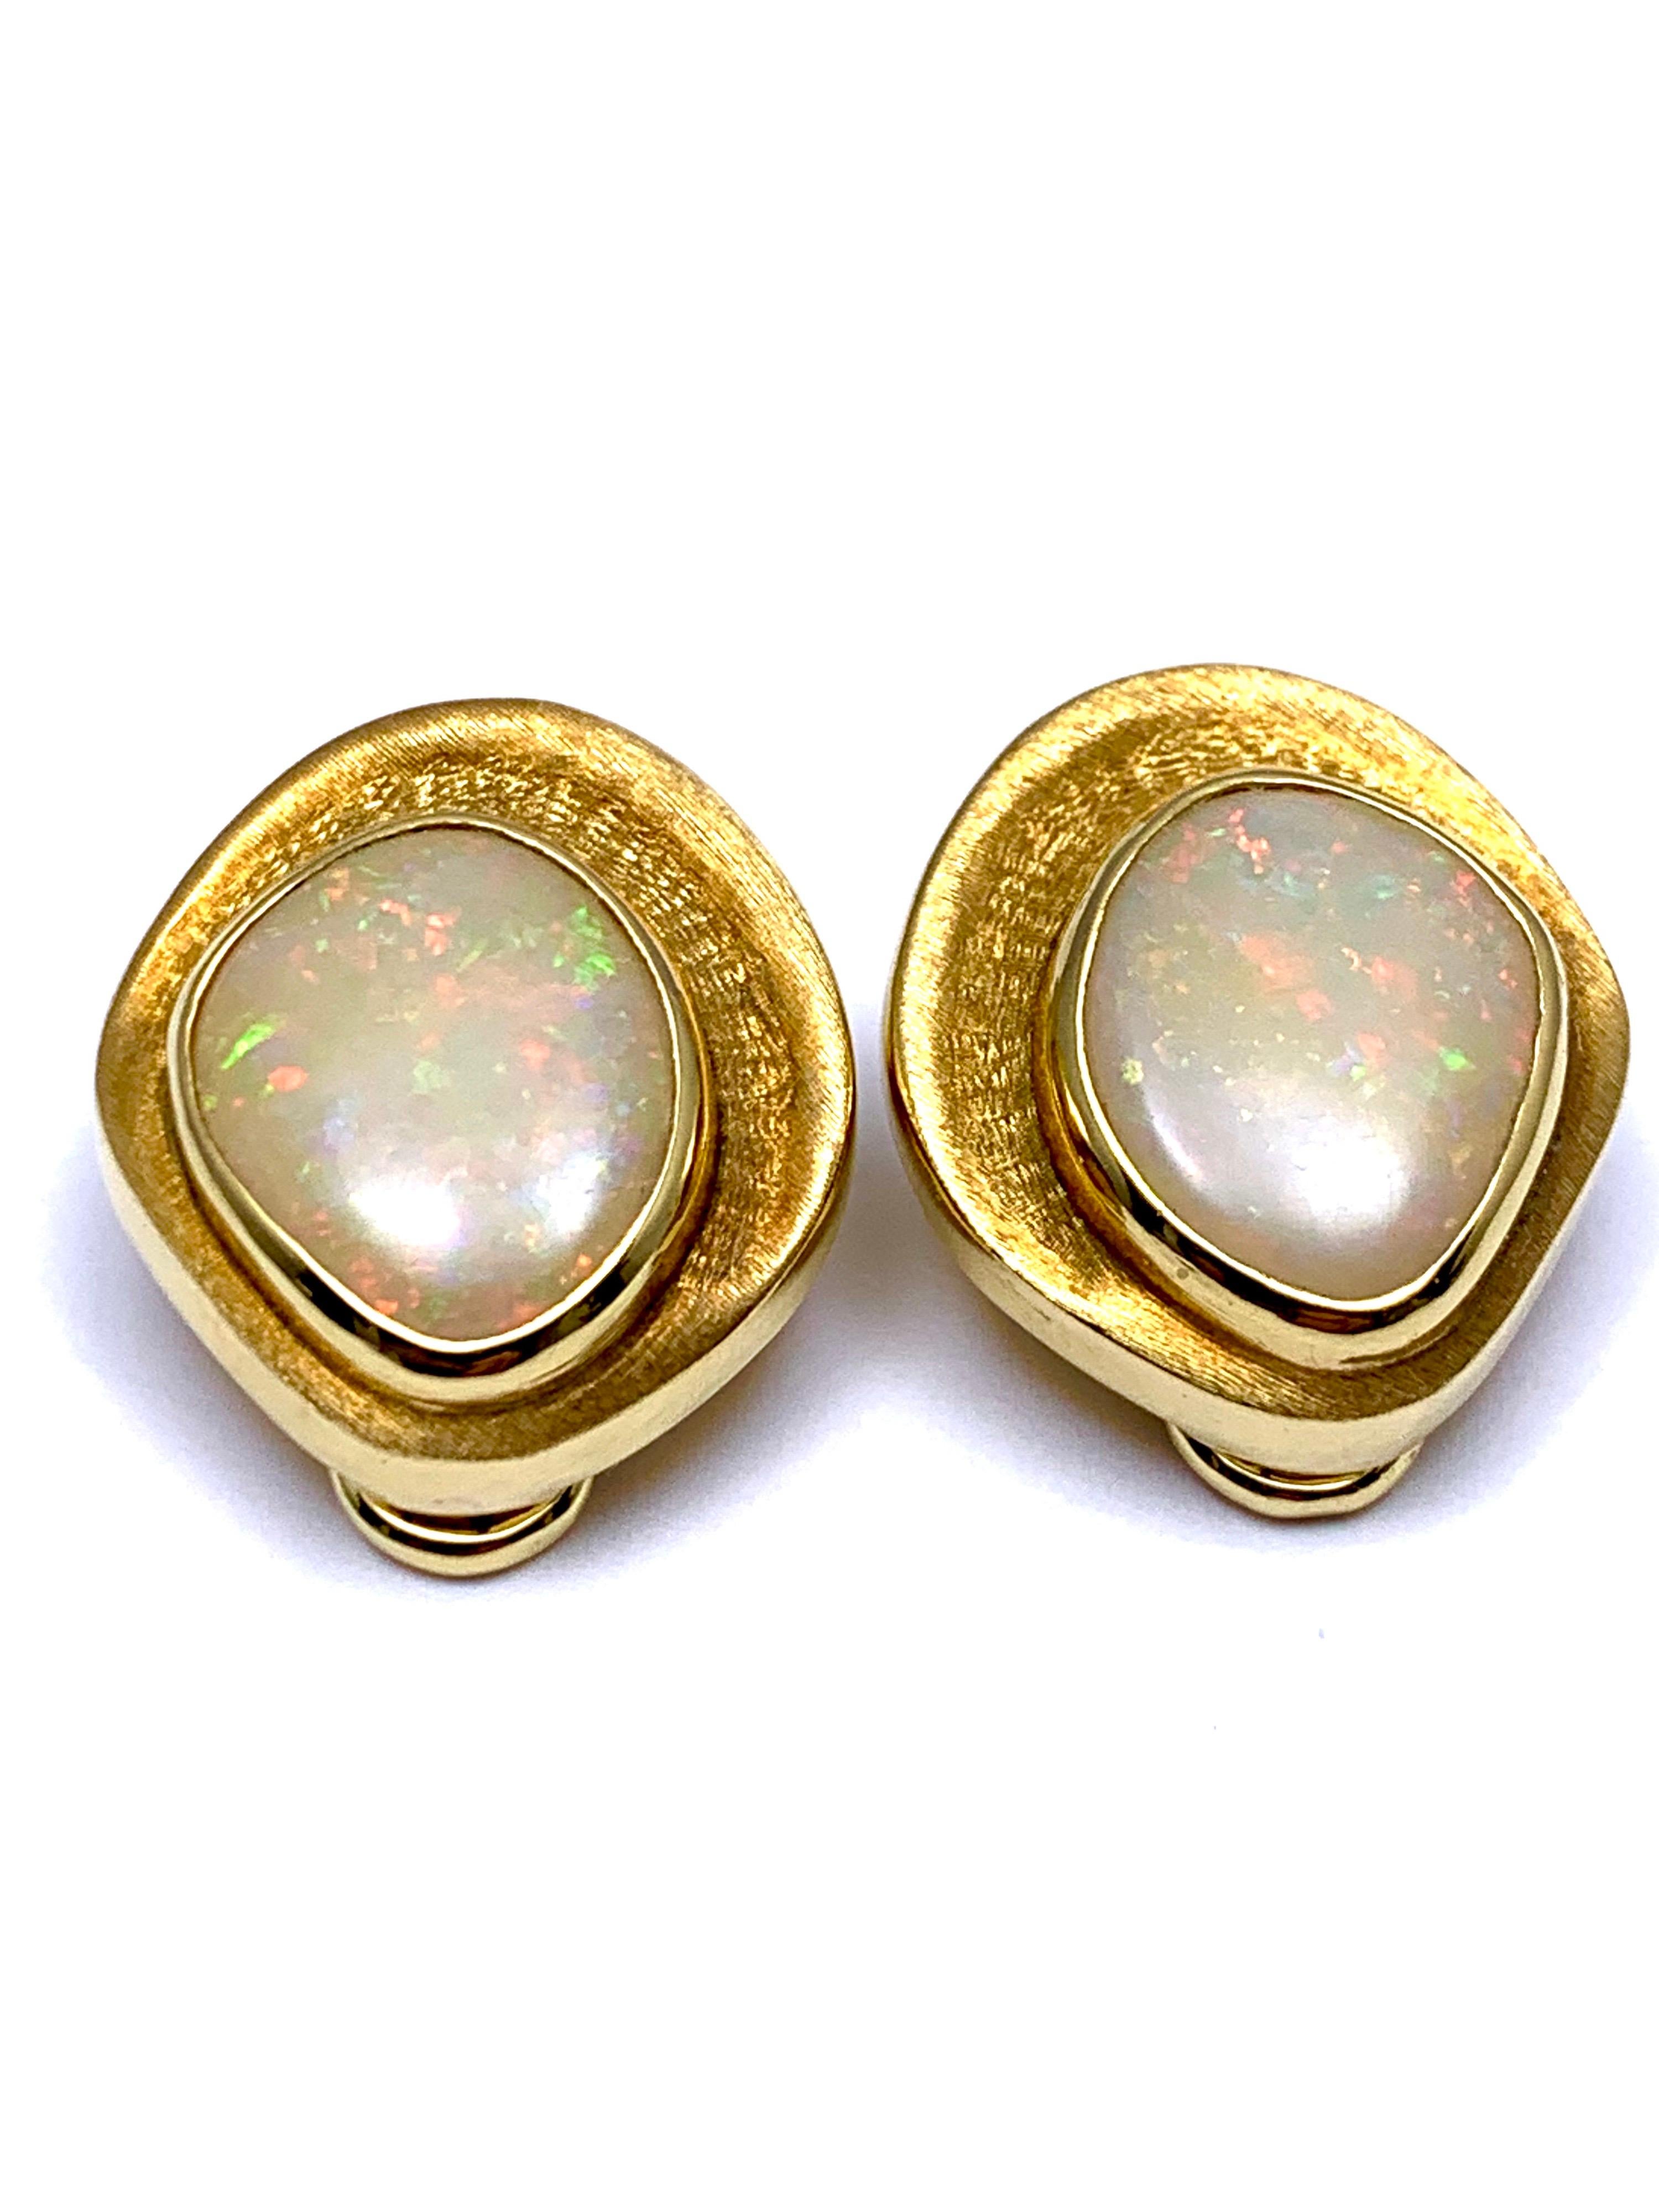 Women's or Men's Burle Marx 5.97 Carat Cabochon White Opal and 18 Karat Yellow Gold Earrings